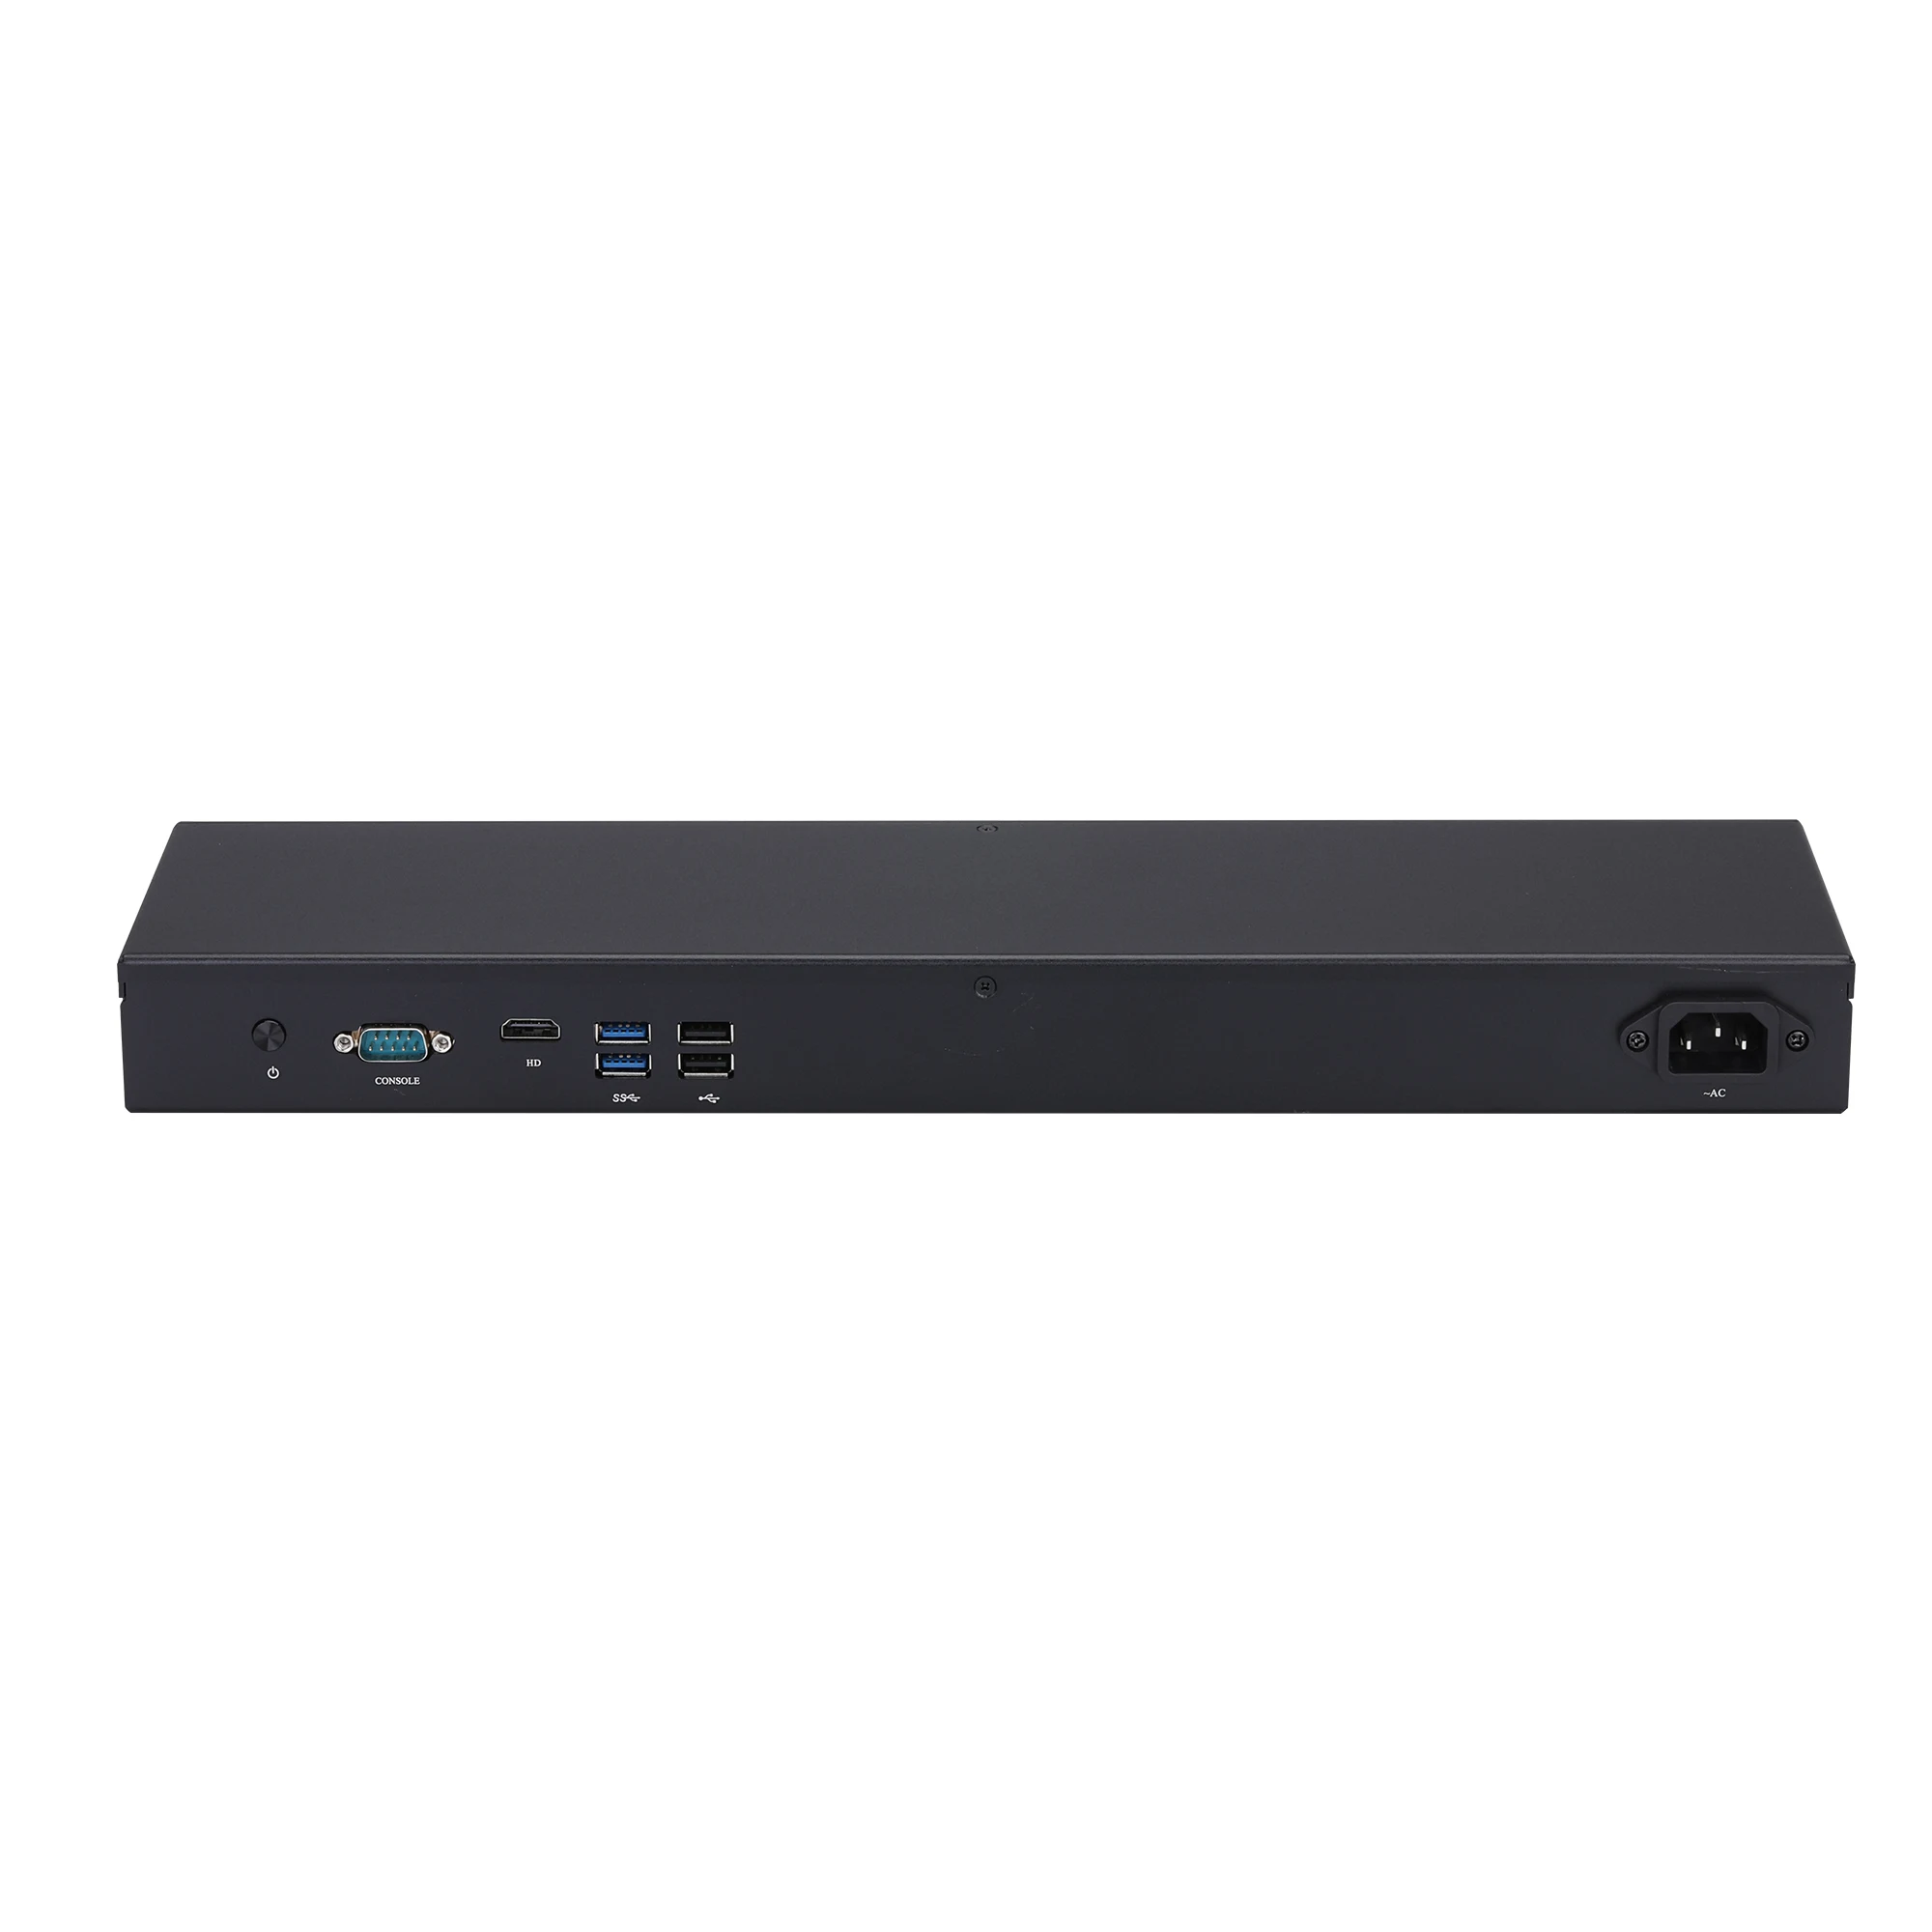 Qotom 4 LAN Port 1u Rack Micro Appliance Router Firewall q335g4-Core i3 5005u